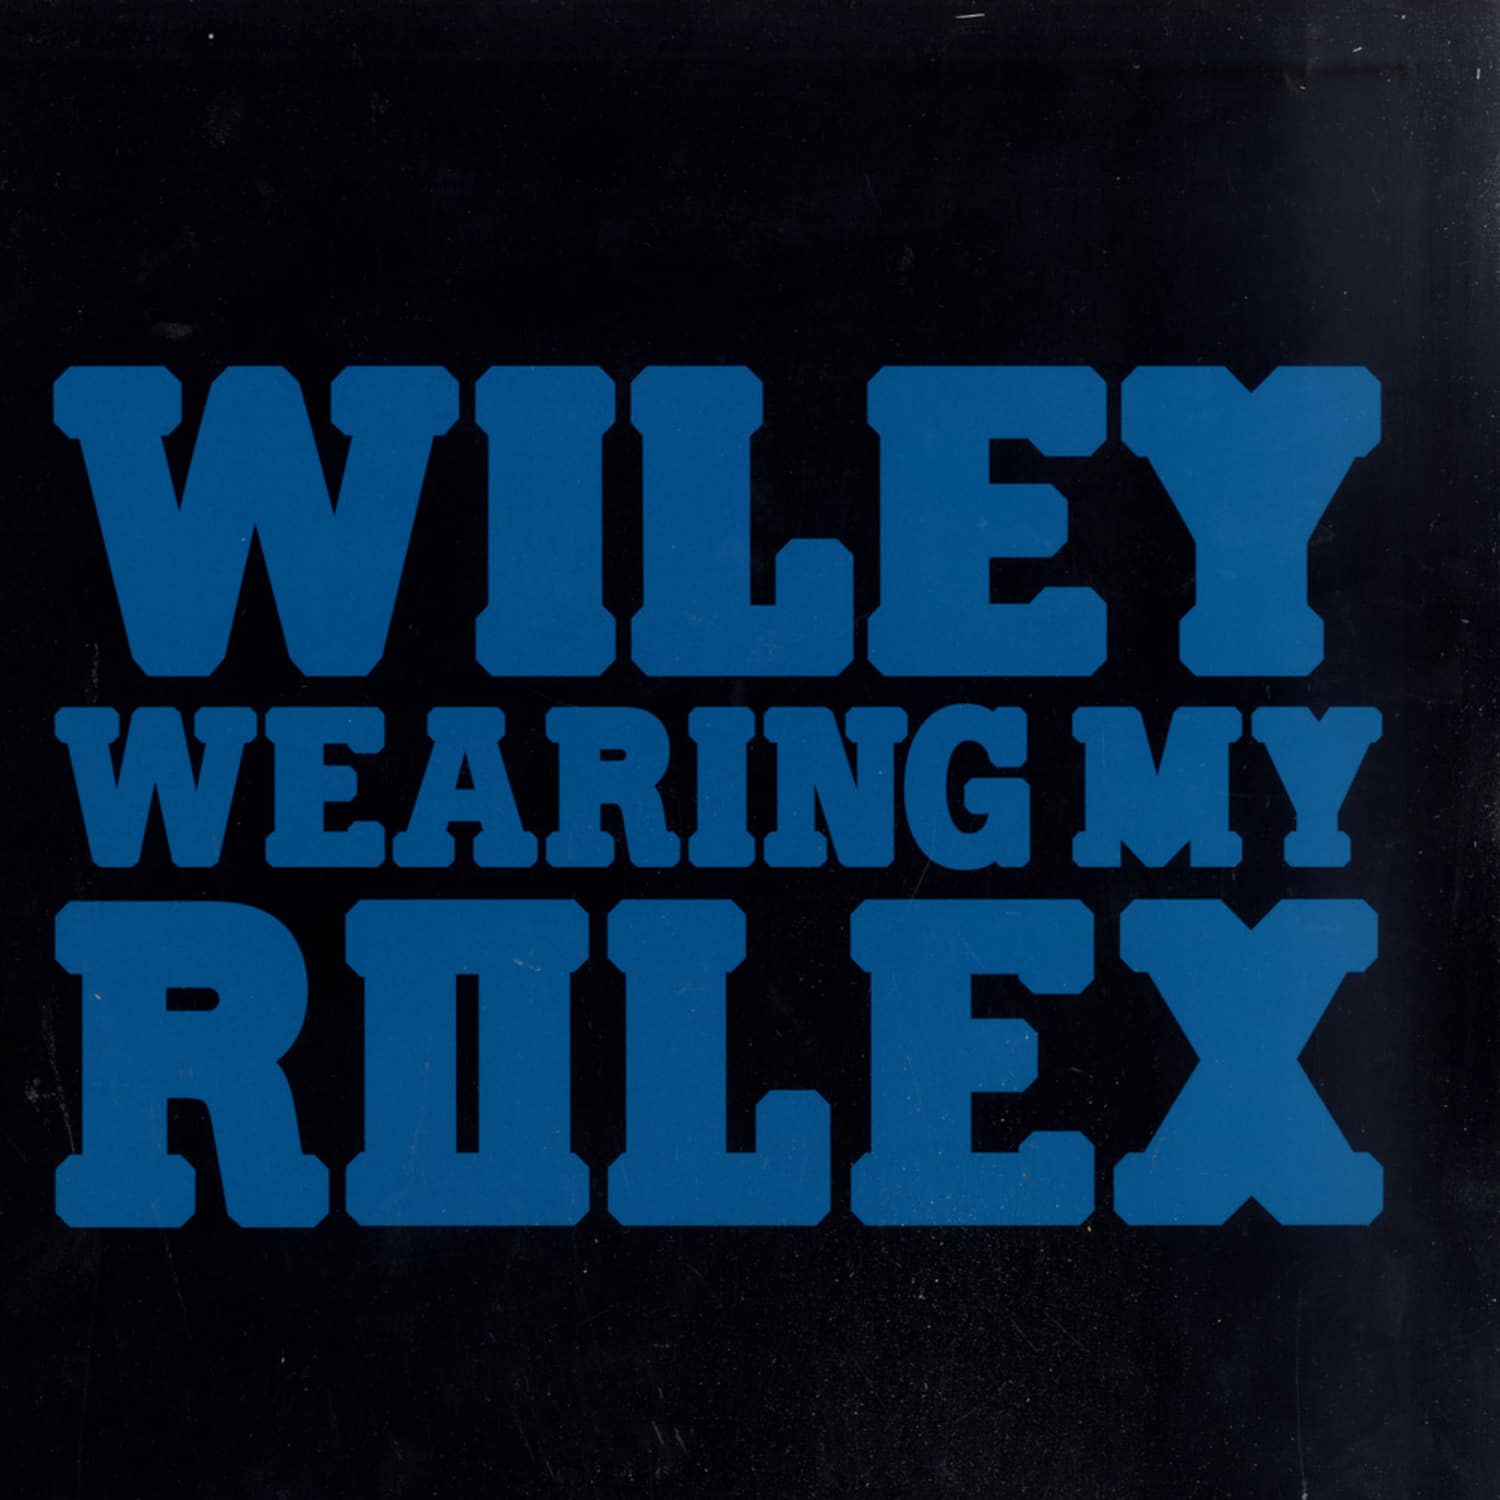 Wiley - WEARING MY ROLEX